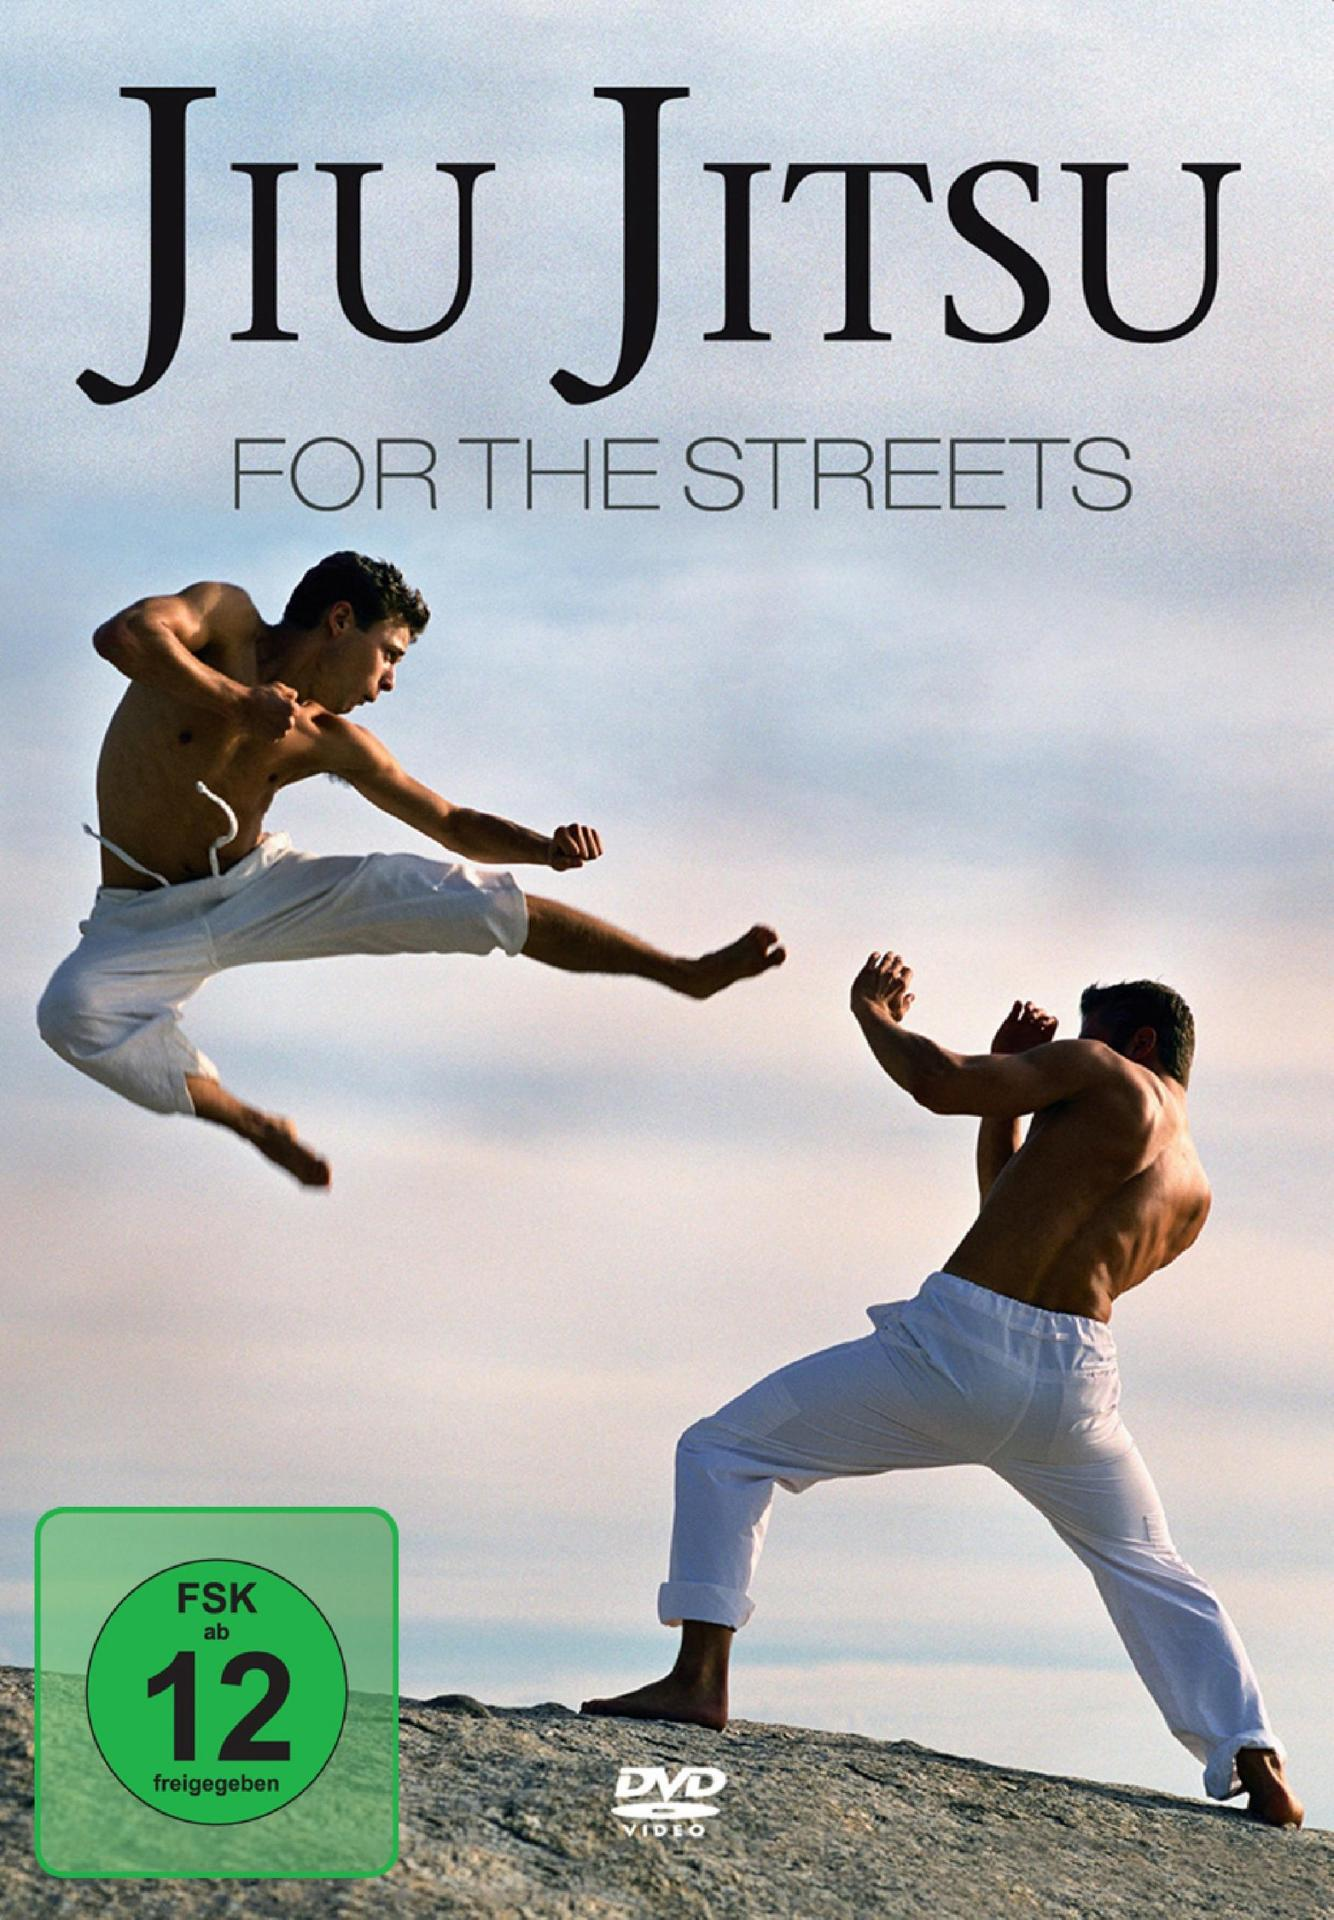 Street DVD Jitsu the for Jiu